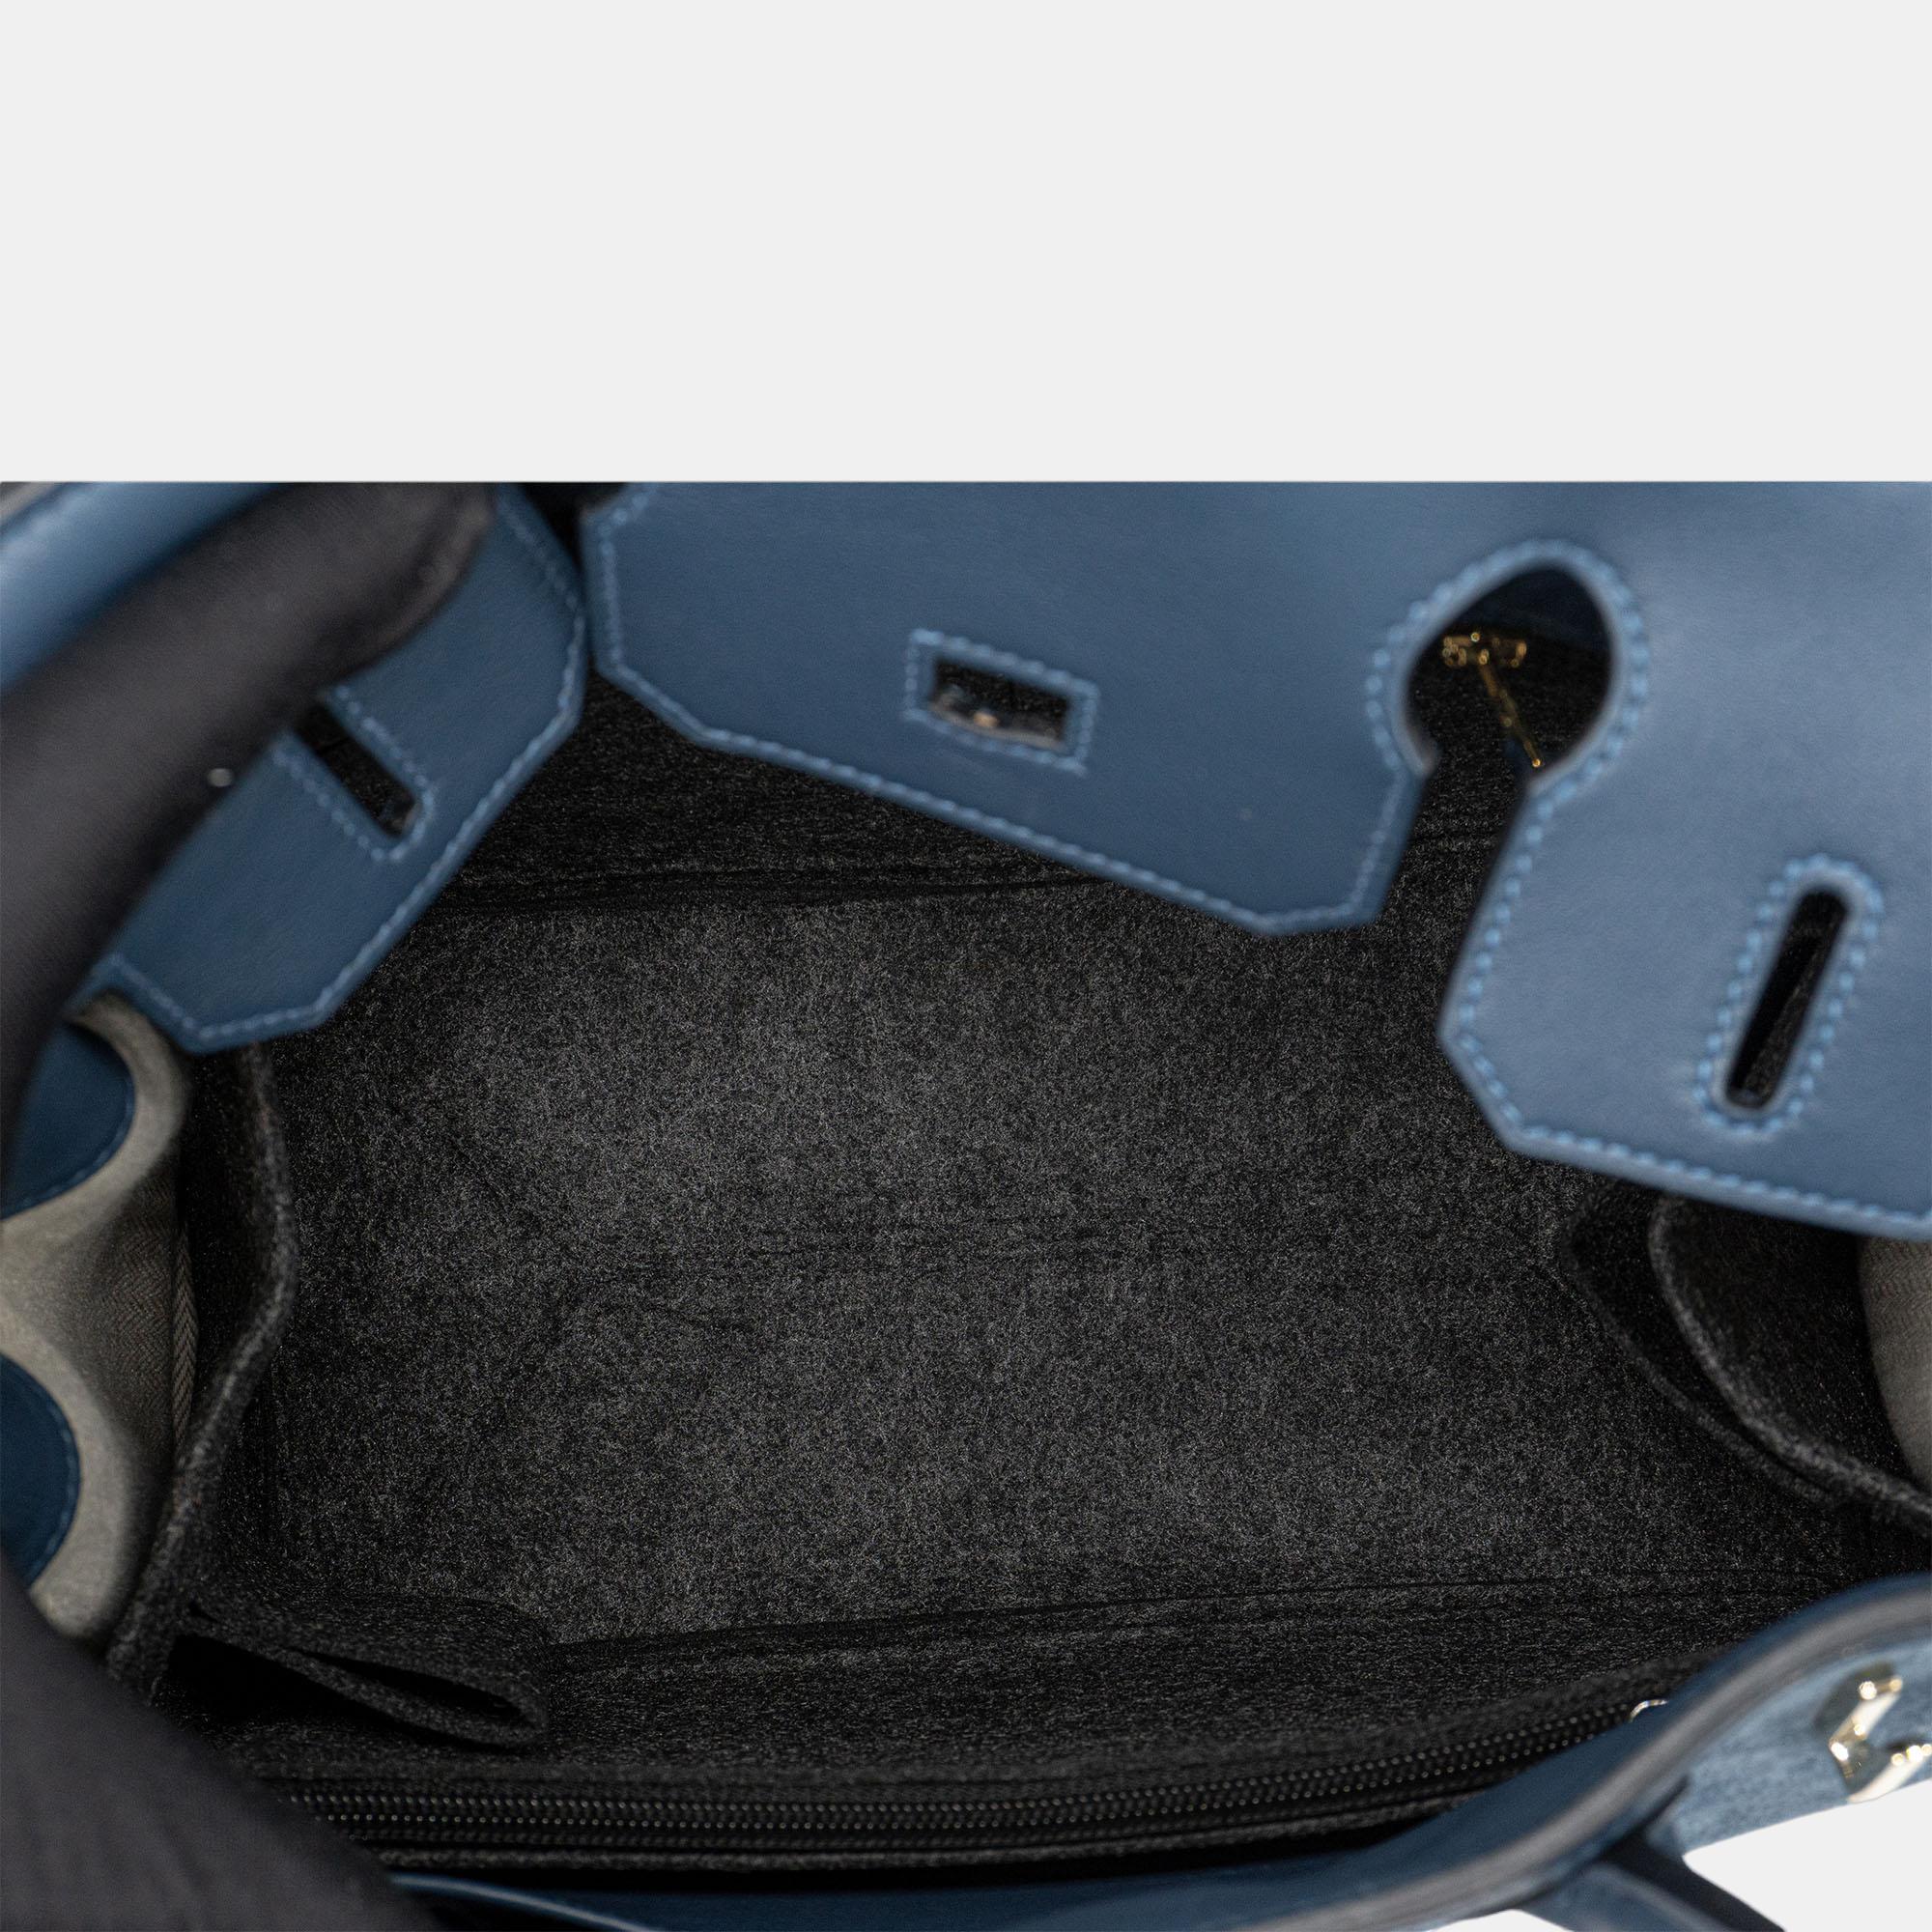 Hermès Birkin 30 Grizzly In Bleu Thalassa With Permabrass Hardware Bag